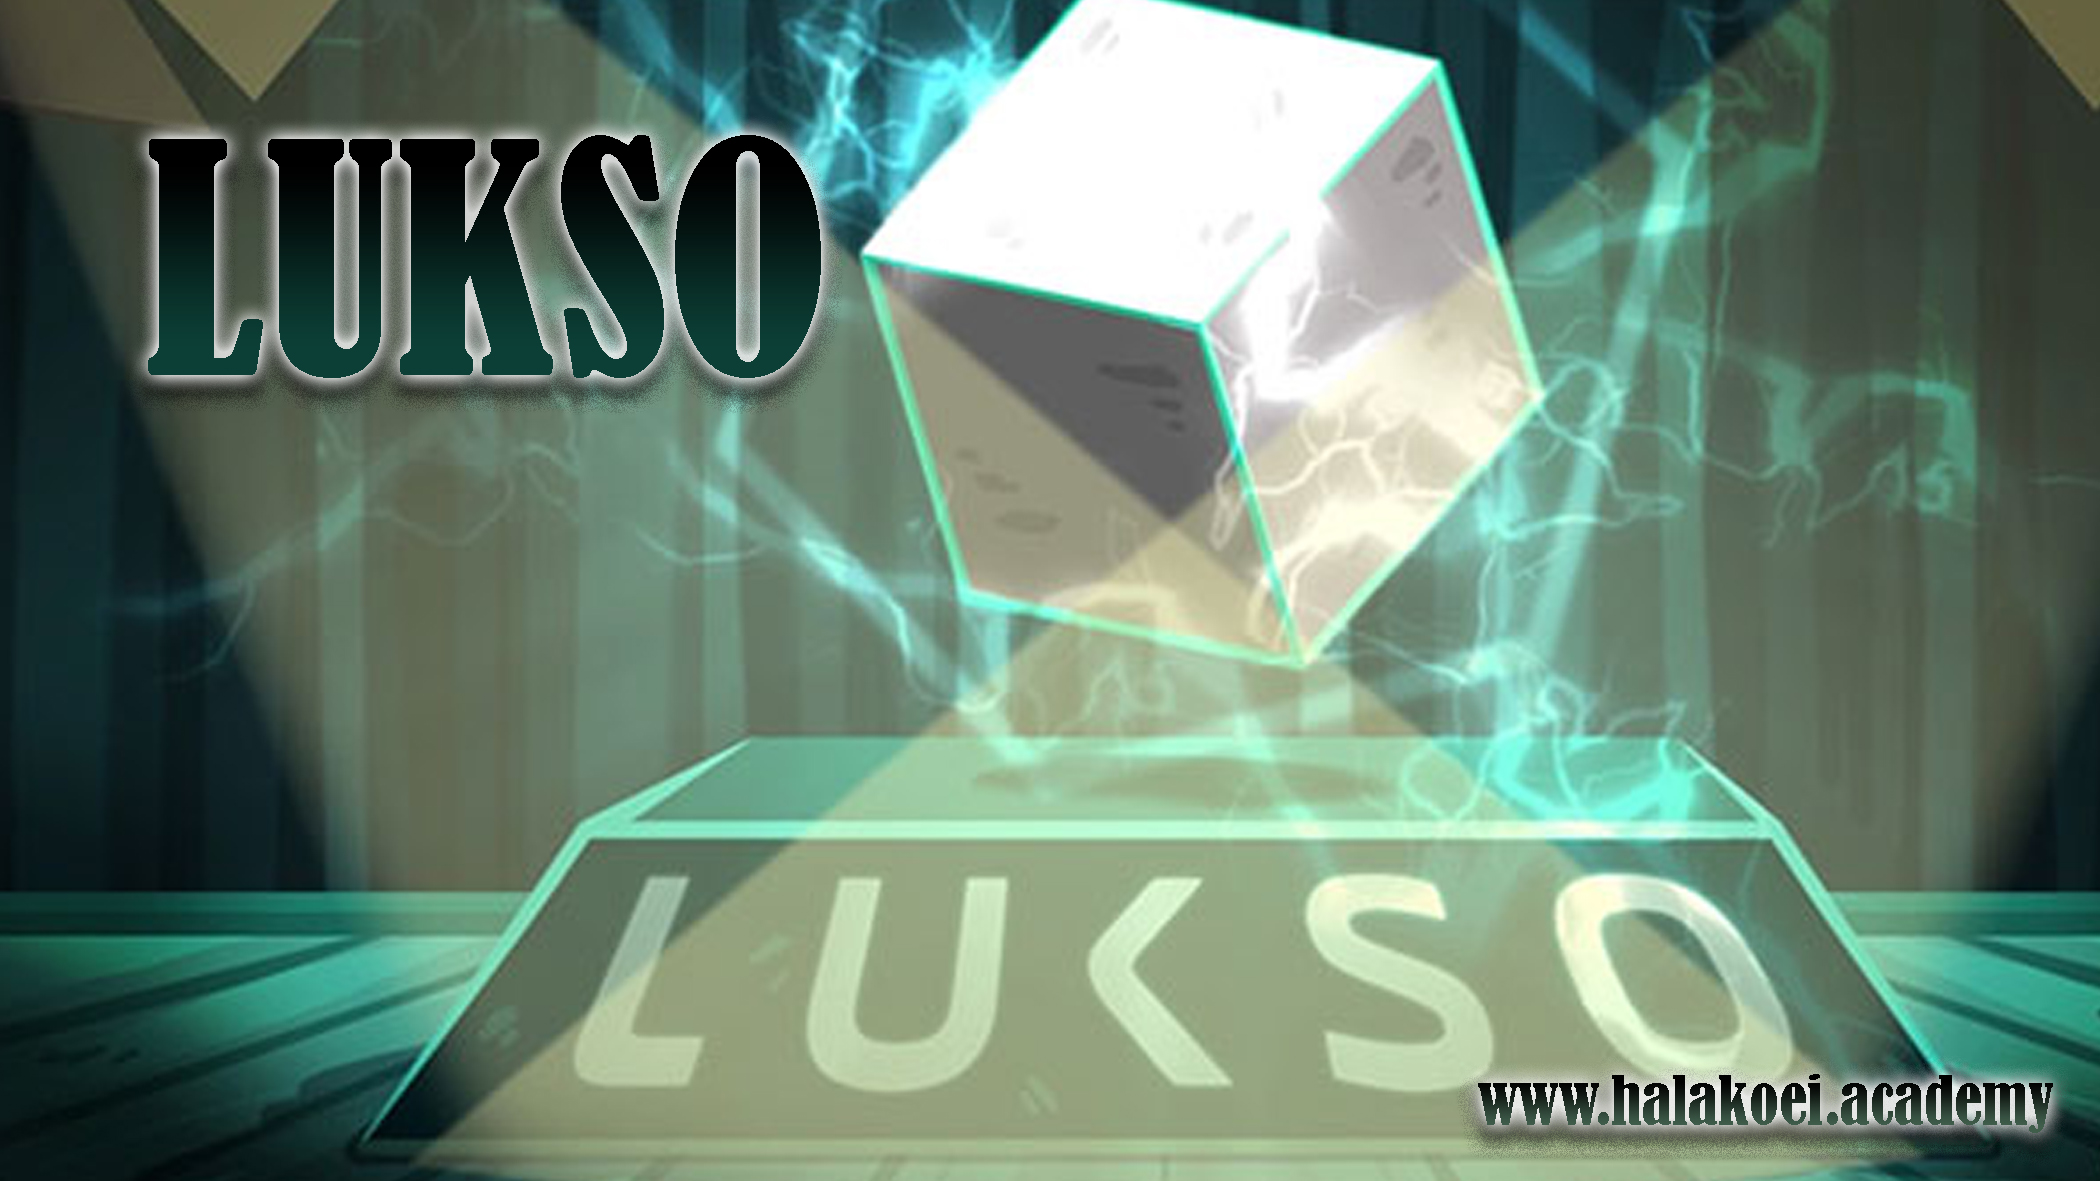 The future of LUKSO